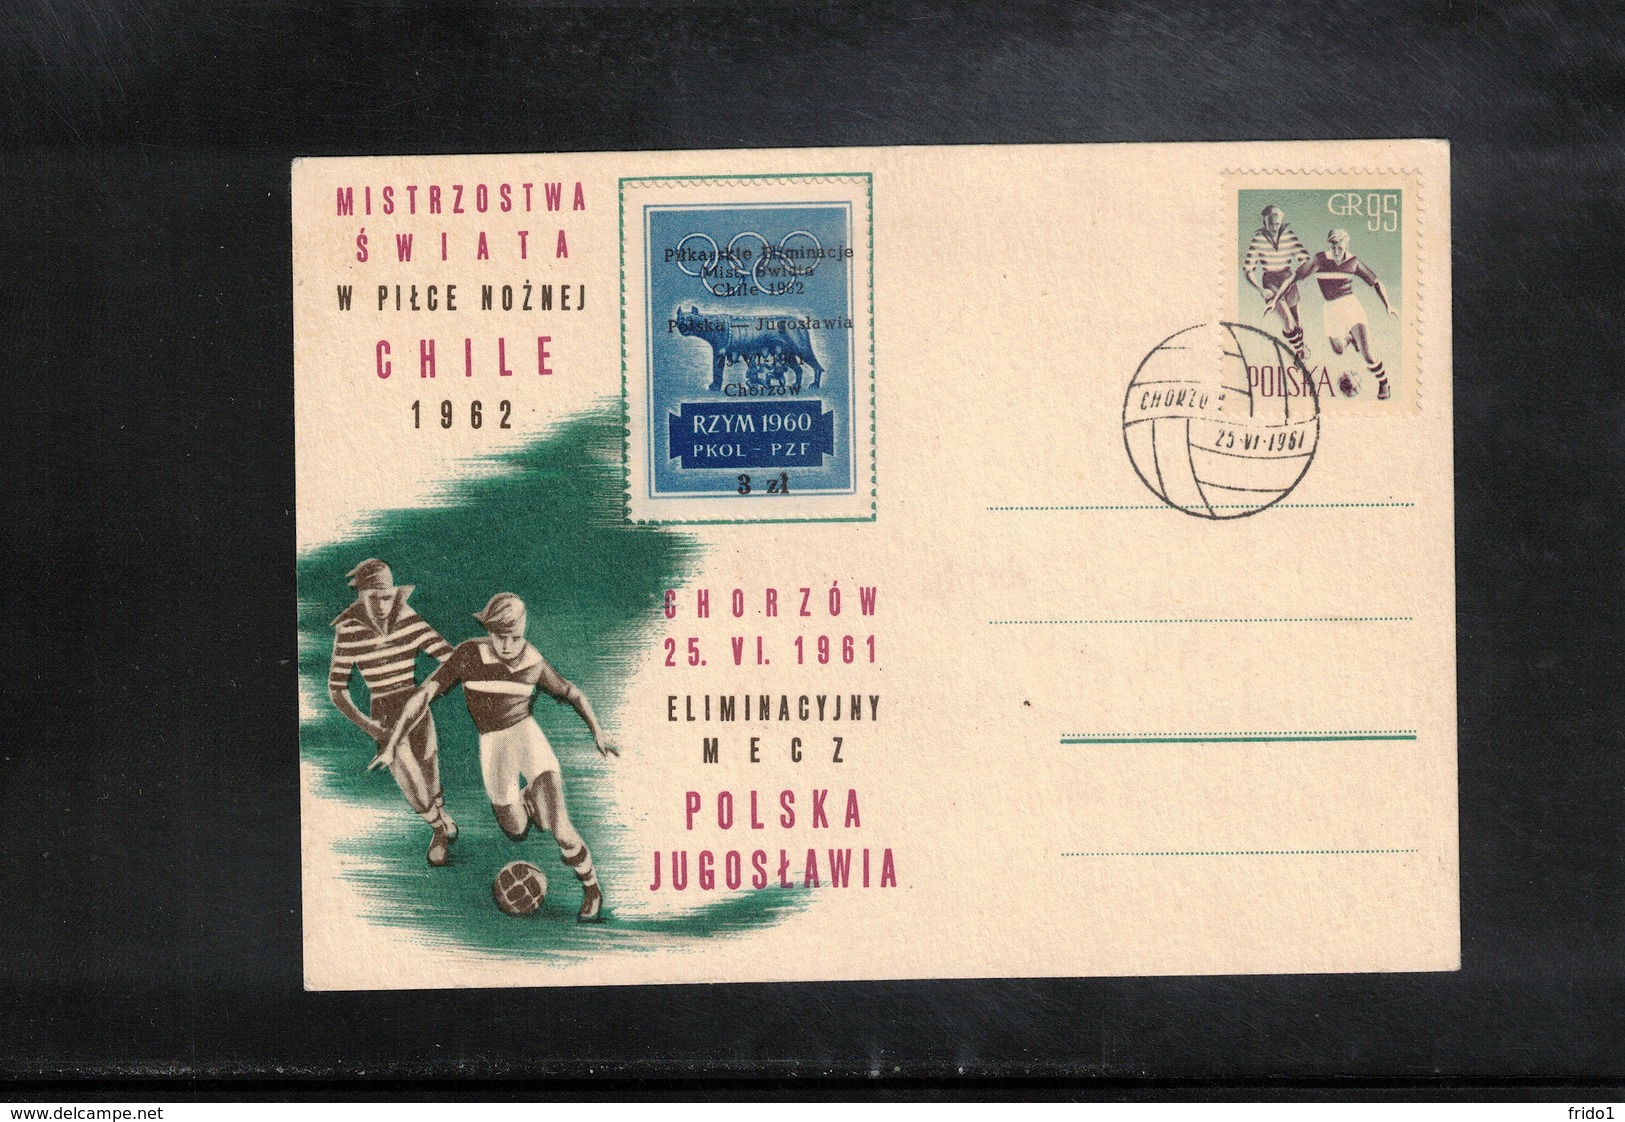 Poland / Polska 1961 World Football Cup Chile Qualification Match Poland - Yugoslavia Interesting Postcard Scarce - 1962 – Chile